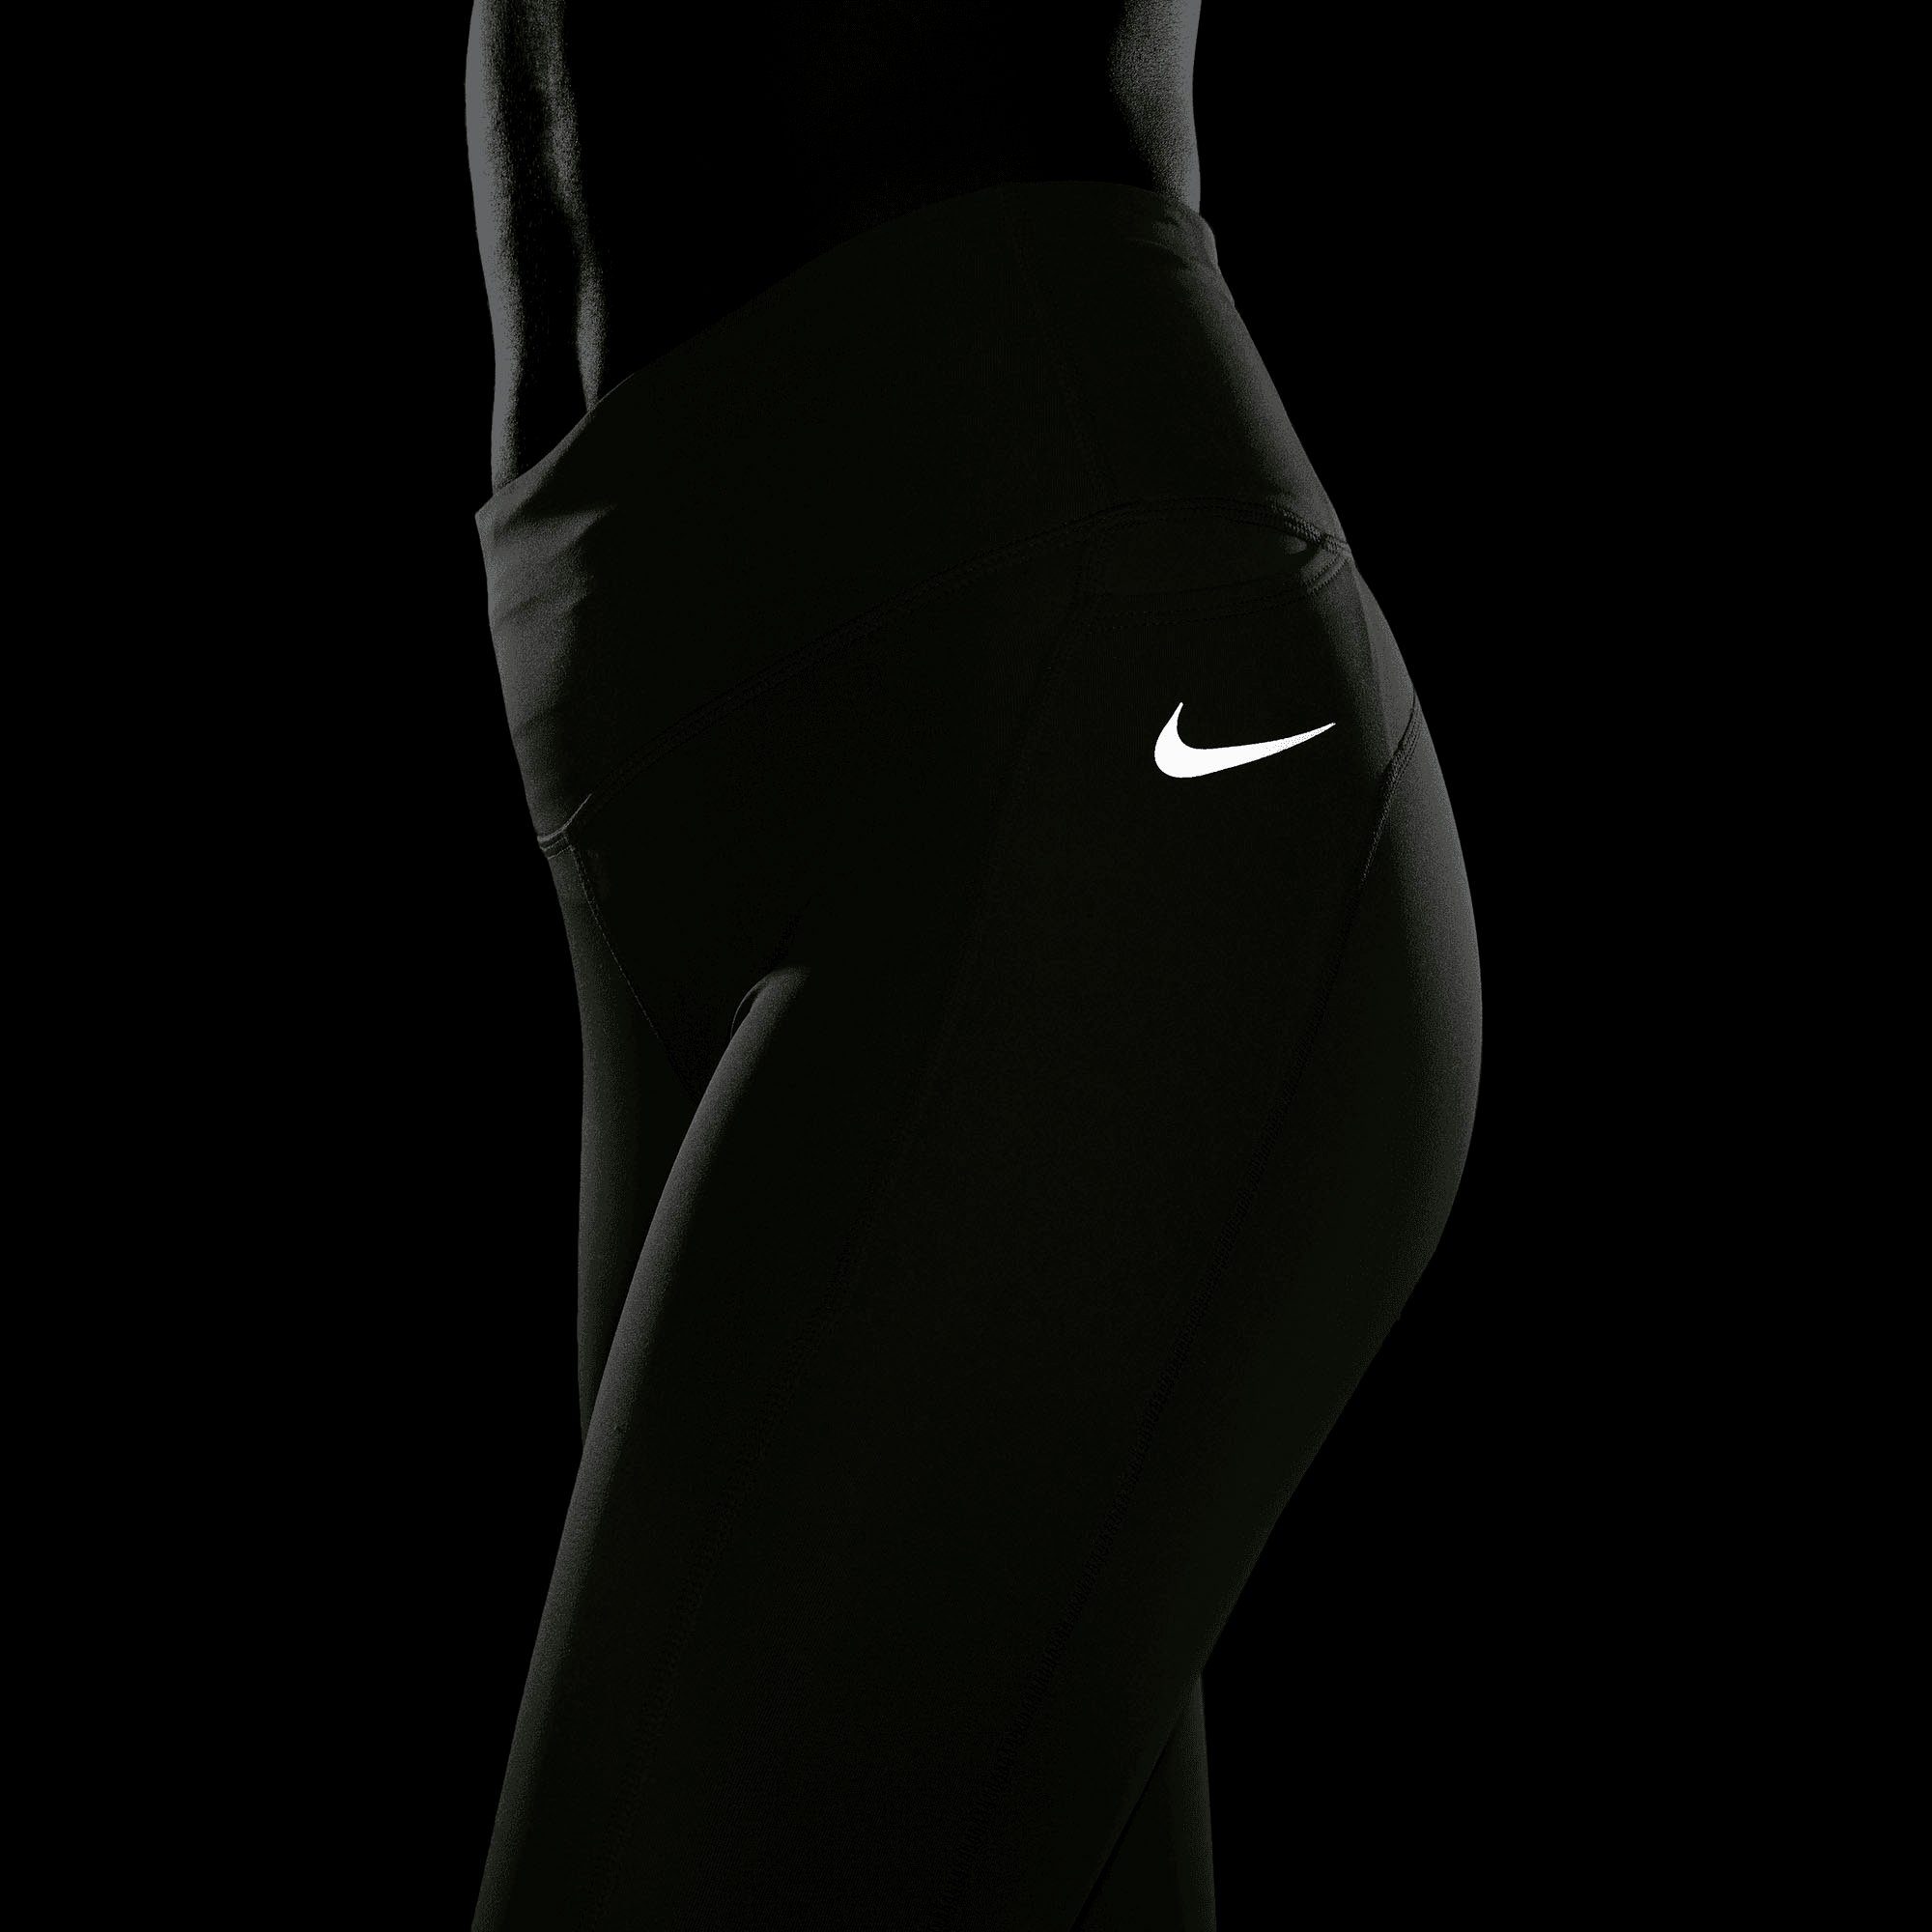 POCKET Nike EPIC WOMEN'S Lauftights grün LEGGINGS FAST MID-RISE RUNNING